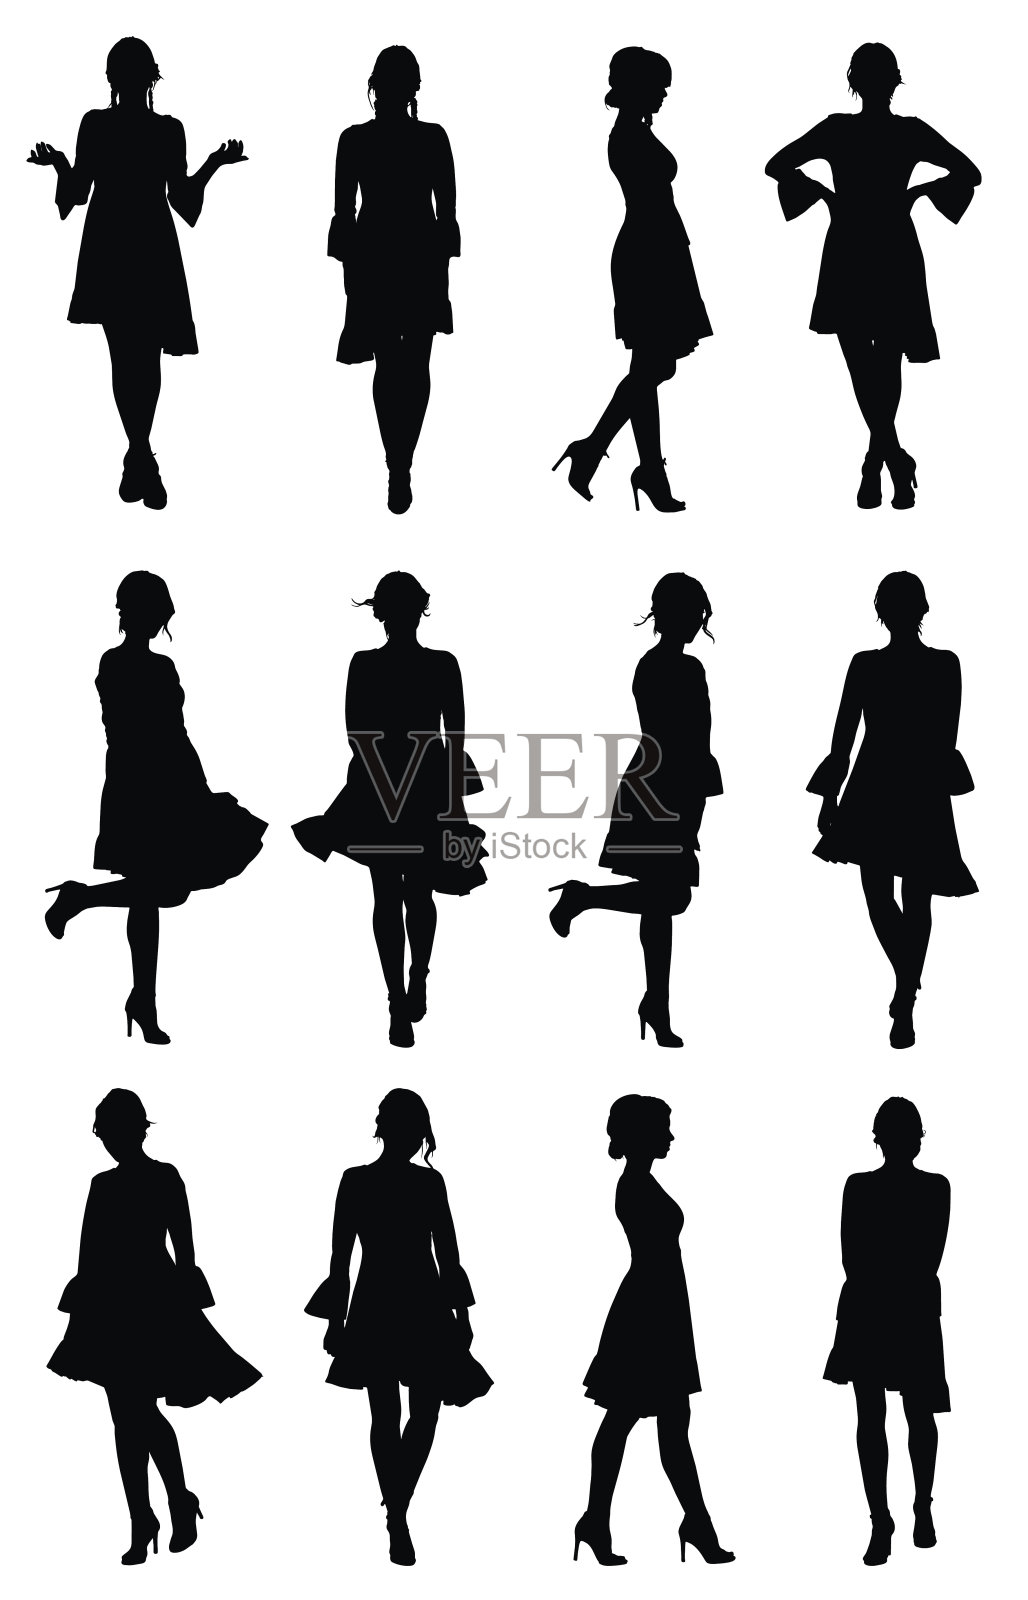 Collection of latin women dancer剪影与荷叶边袖连衣裙在不同的姿势插画图片素材